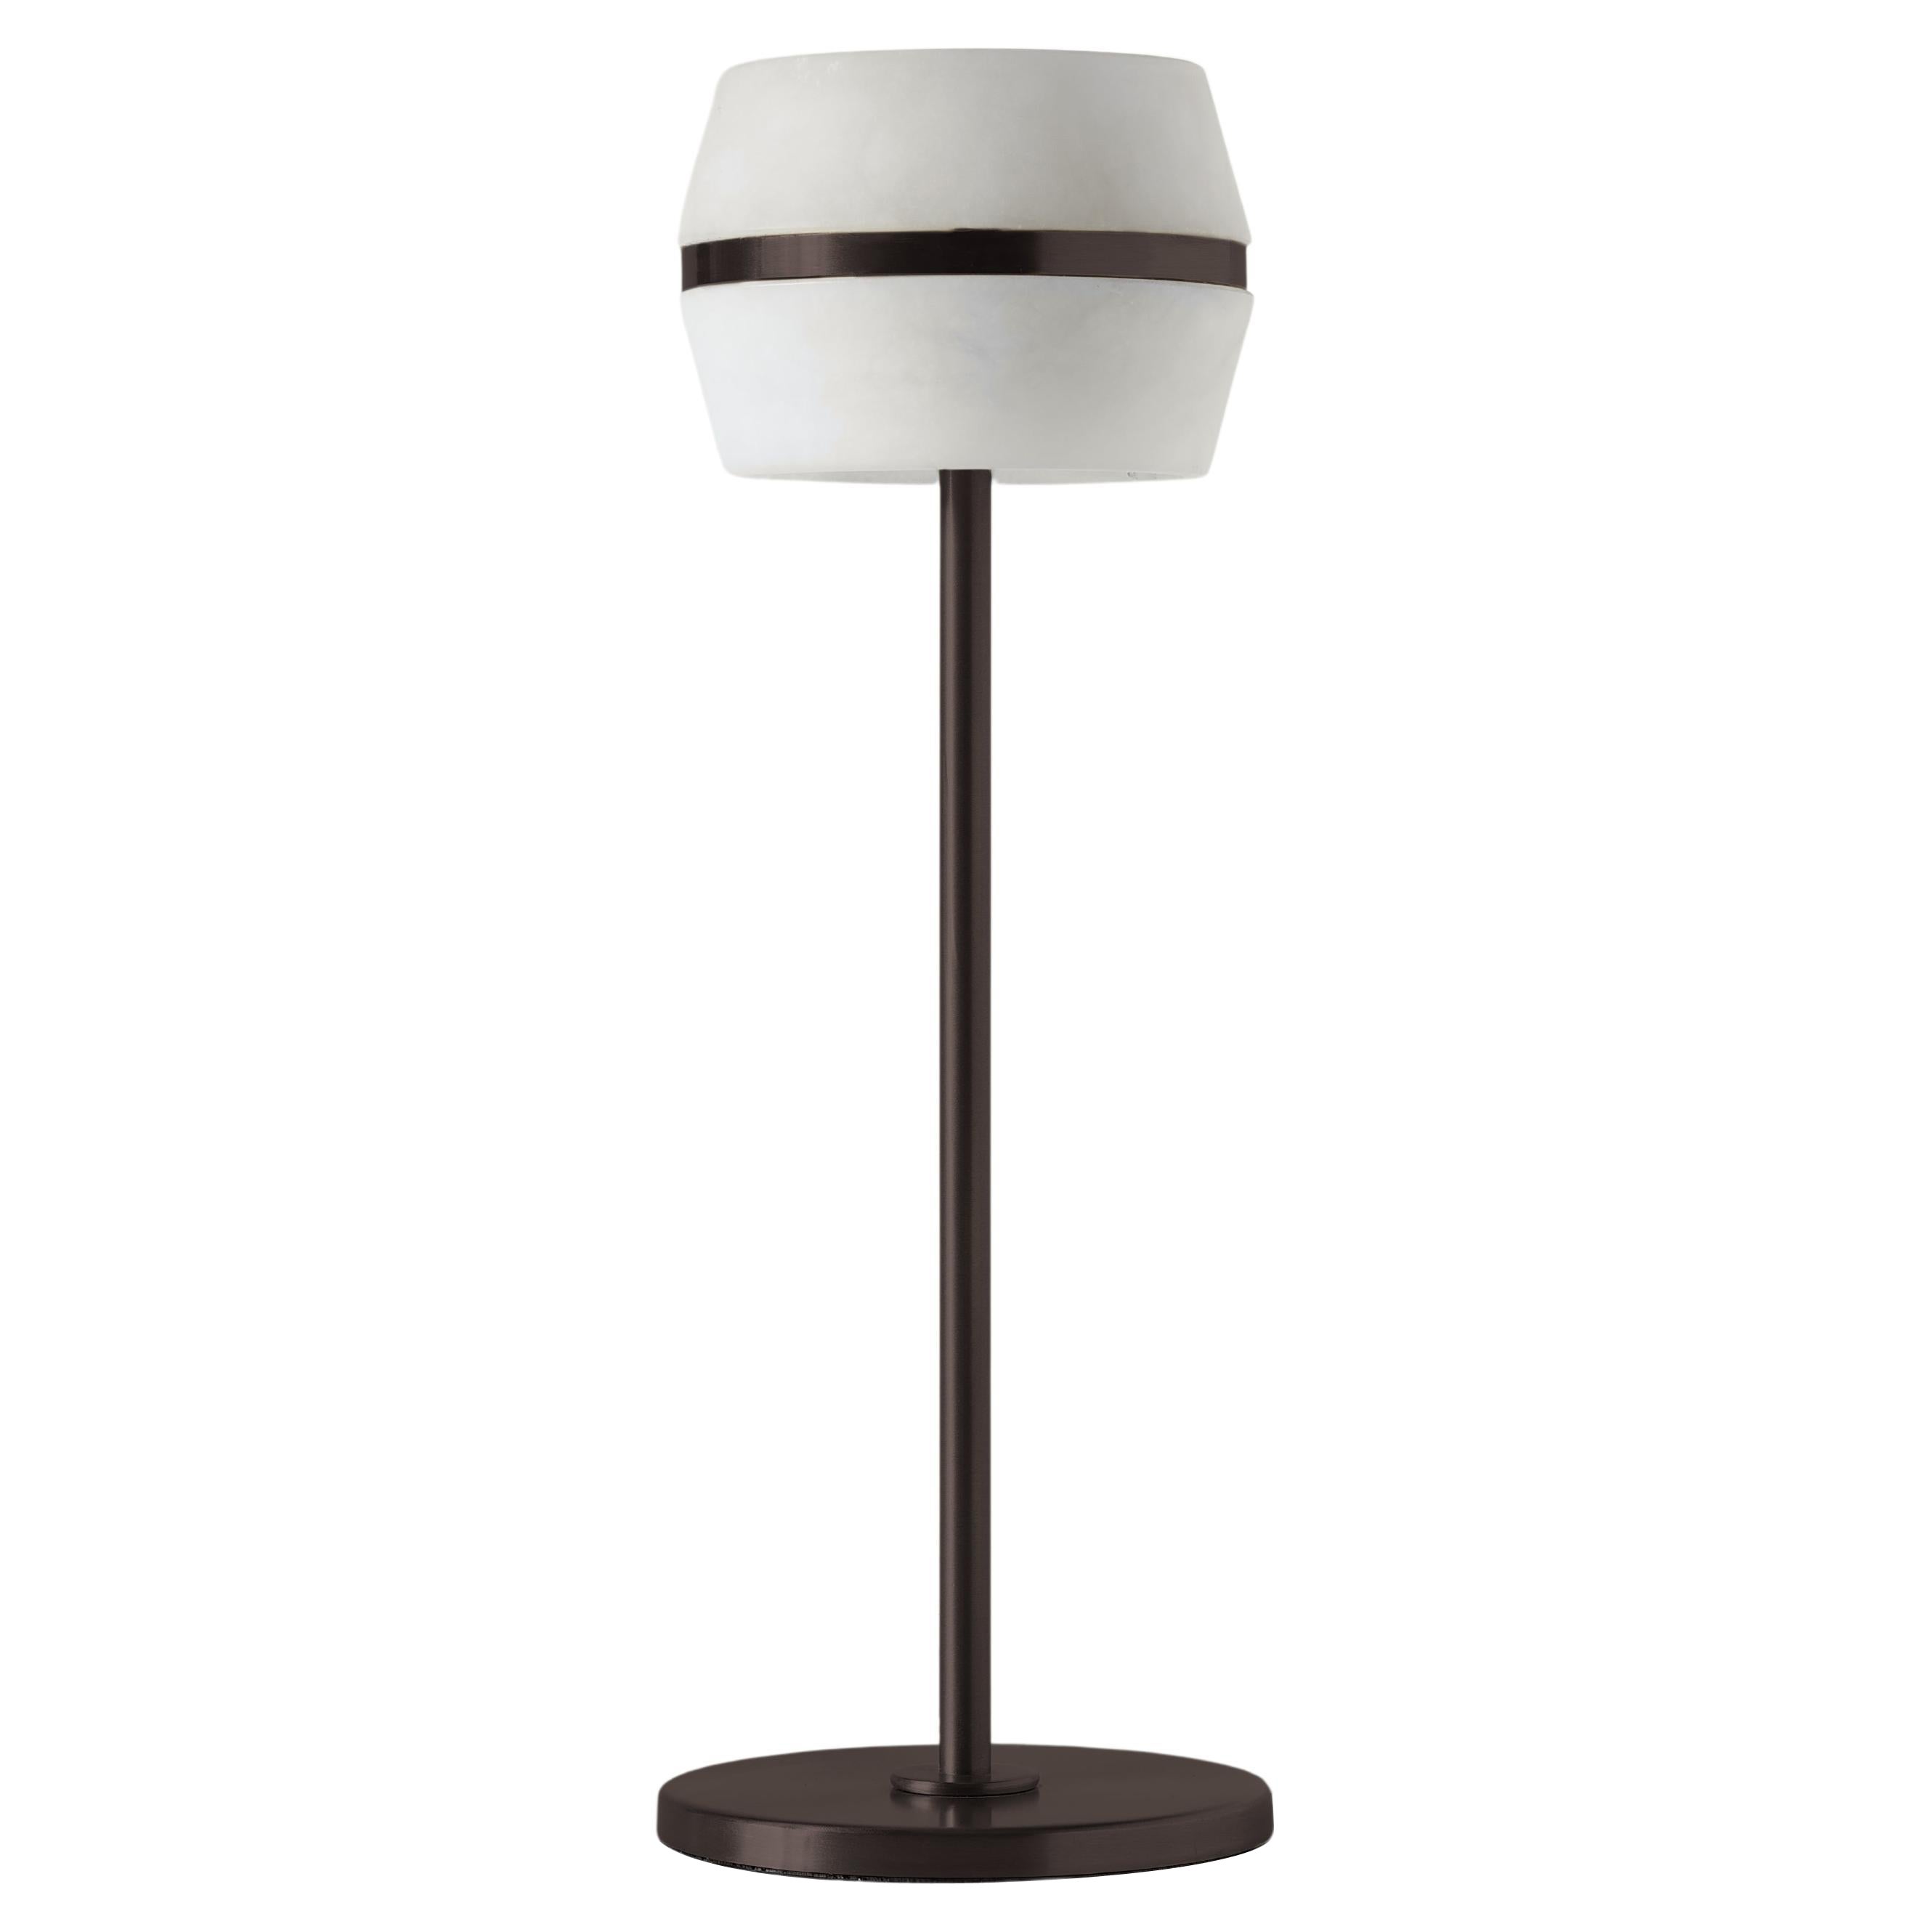 Modern Italian Table Lamp "Tommy Wireless" - Light Bronze For Sale